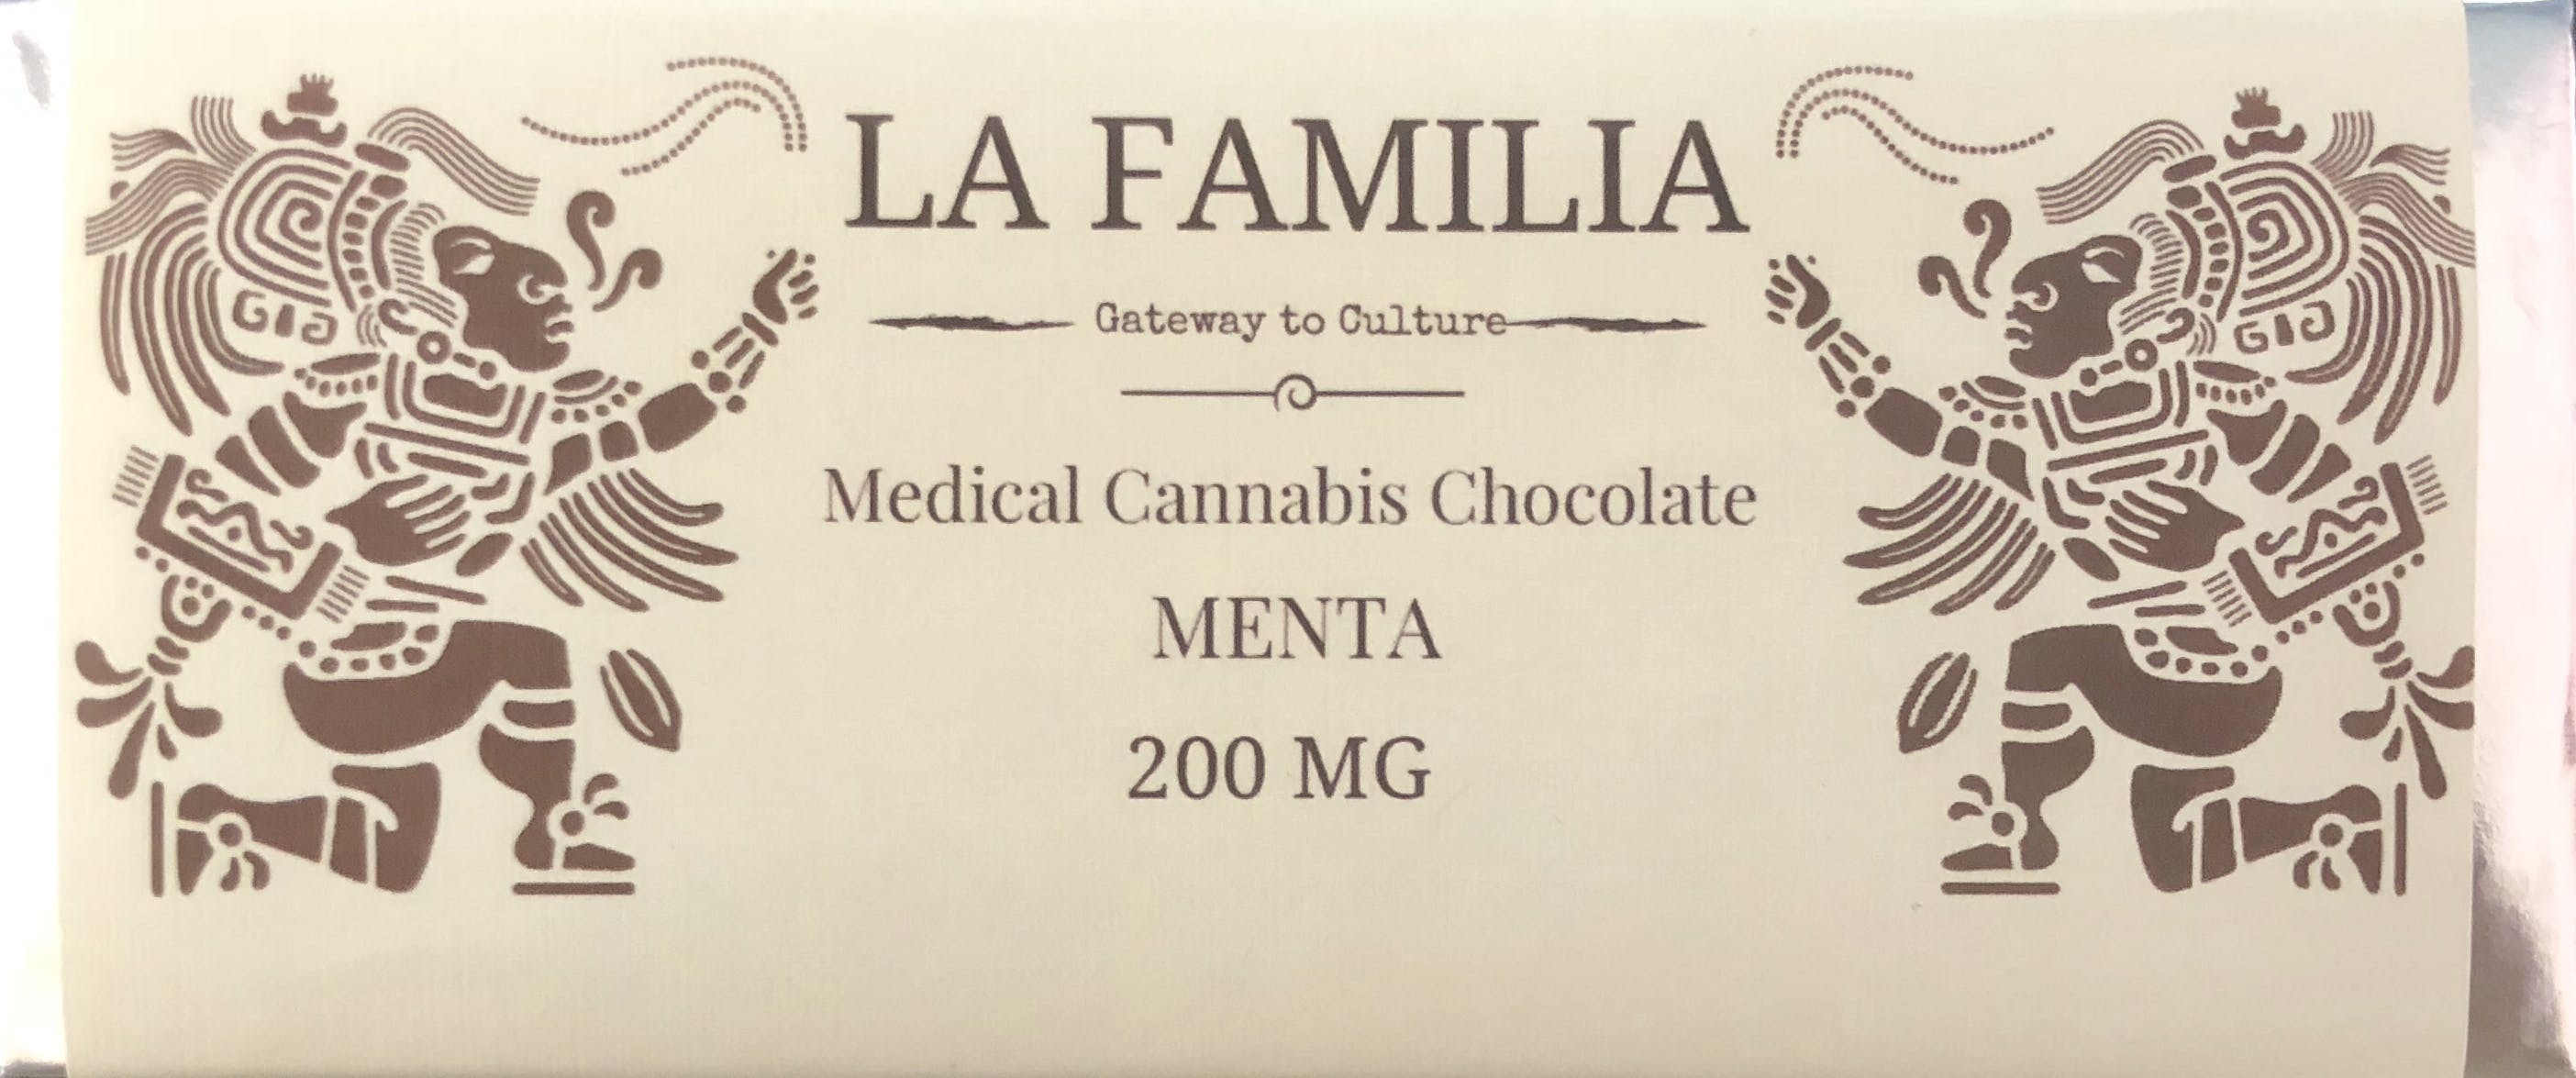 marijuana-dispensaries-420-friends-in-temecula-la-familia-200mg-menta